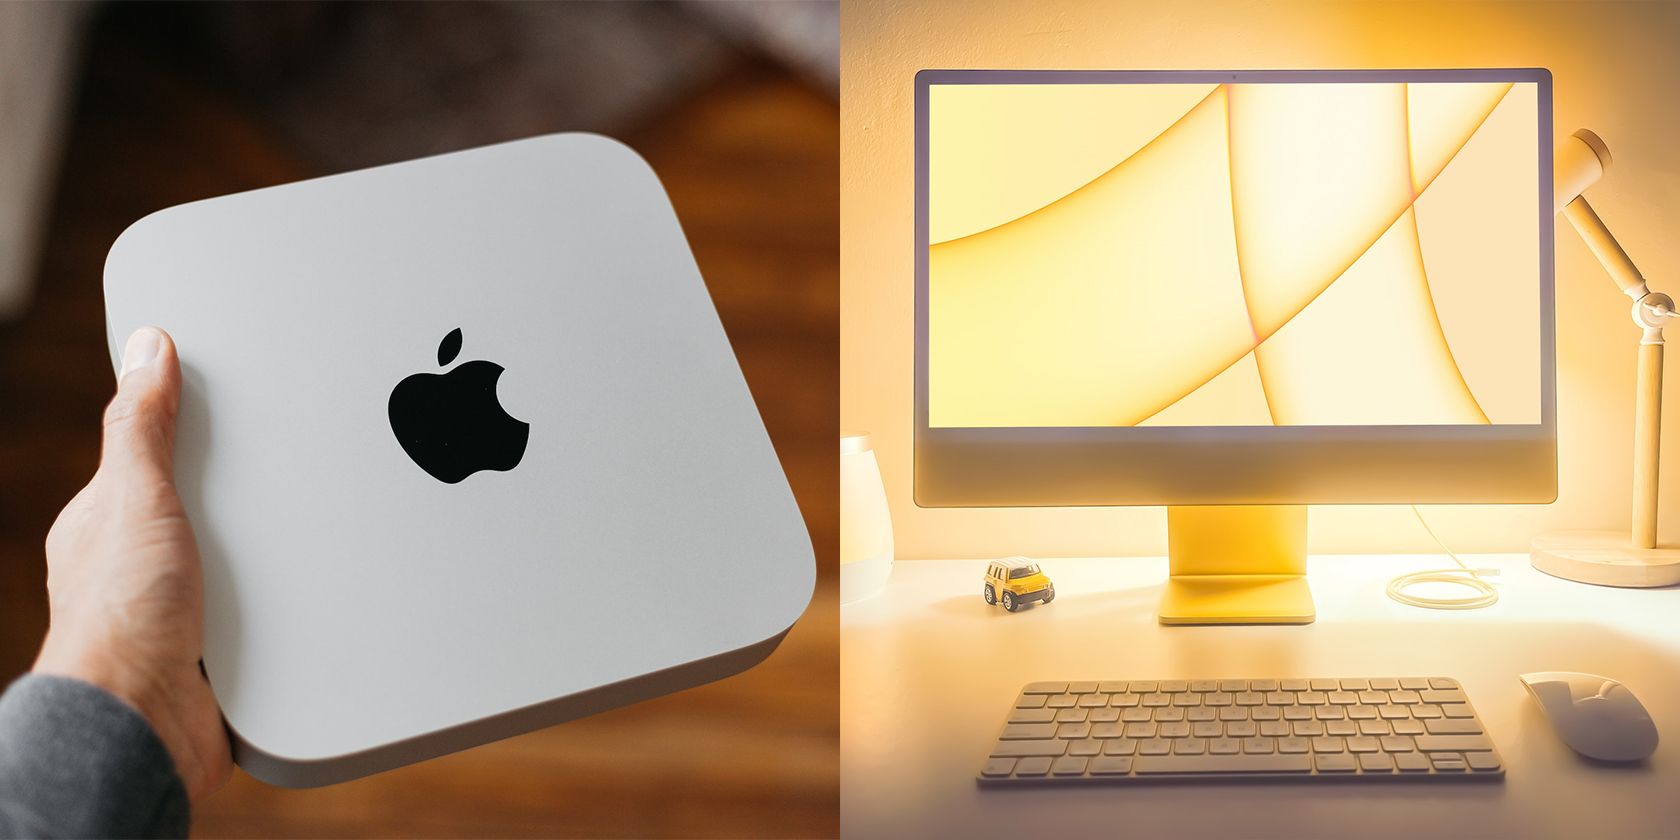 Mac mini and iMac side by side